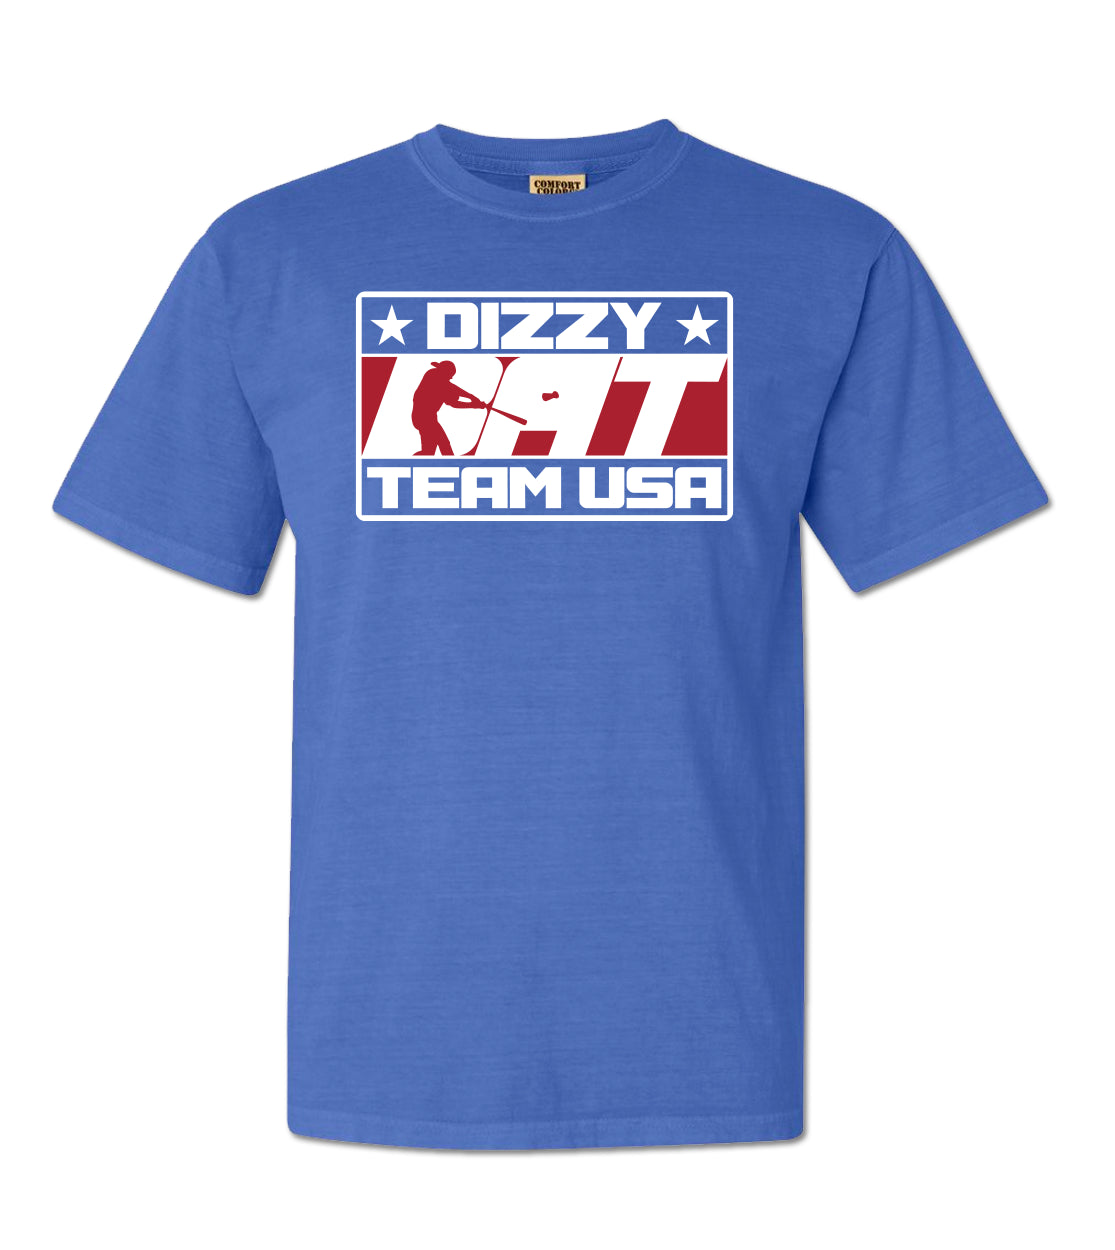 Dizzy Bat Team USA Tee